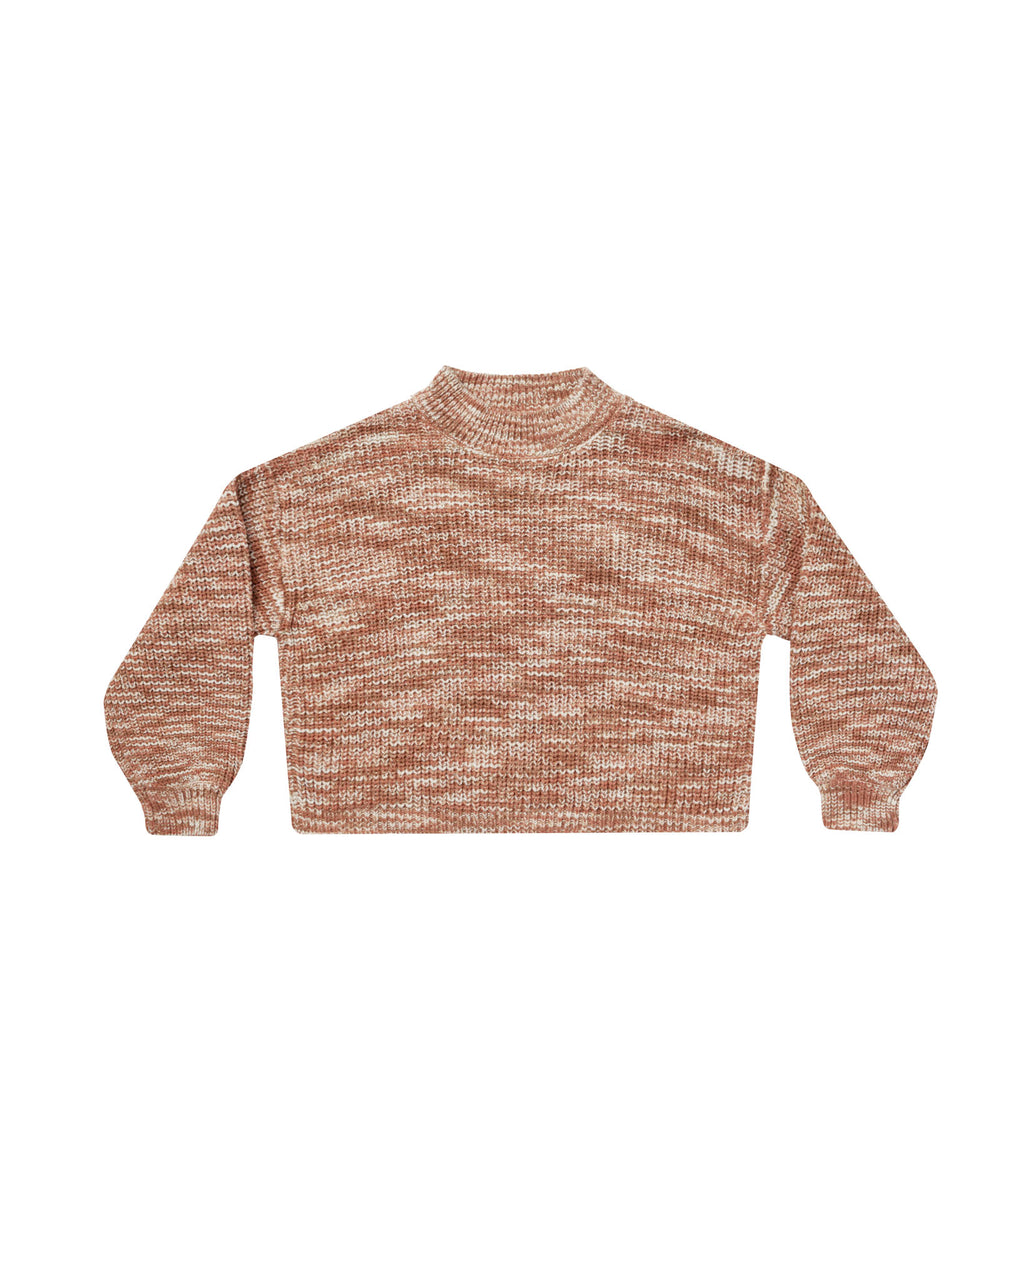 Rylee + Cru Knit Sweater - Heathered Spice